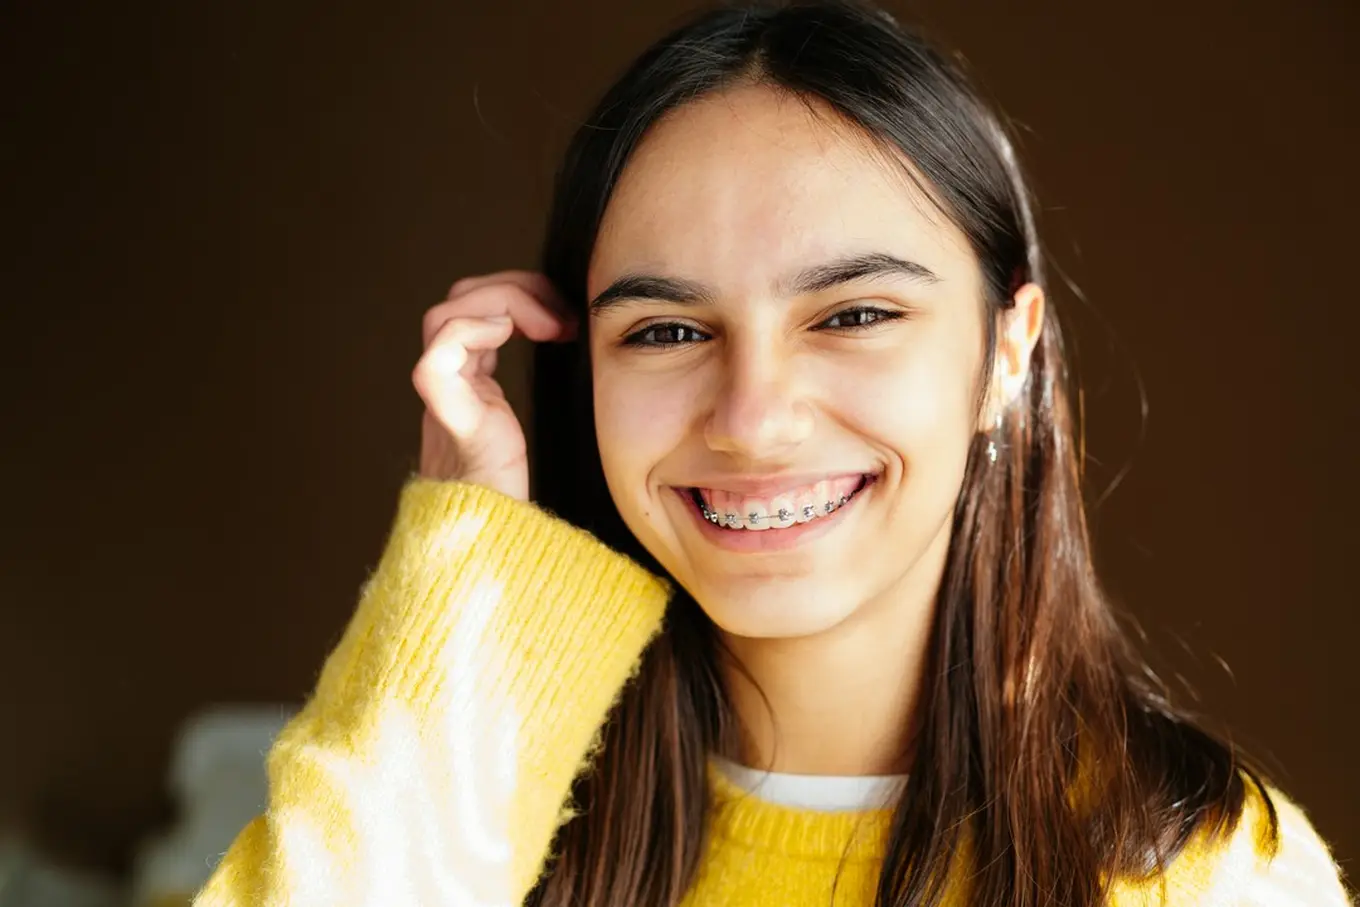 nastolatka z aparatem ortodontycznym